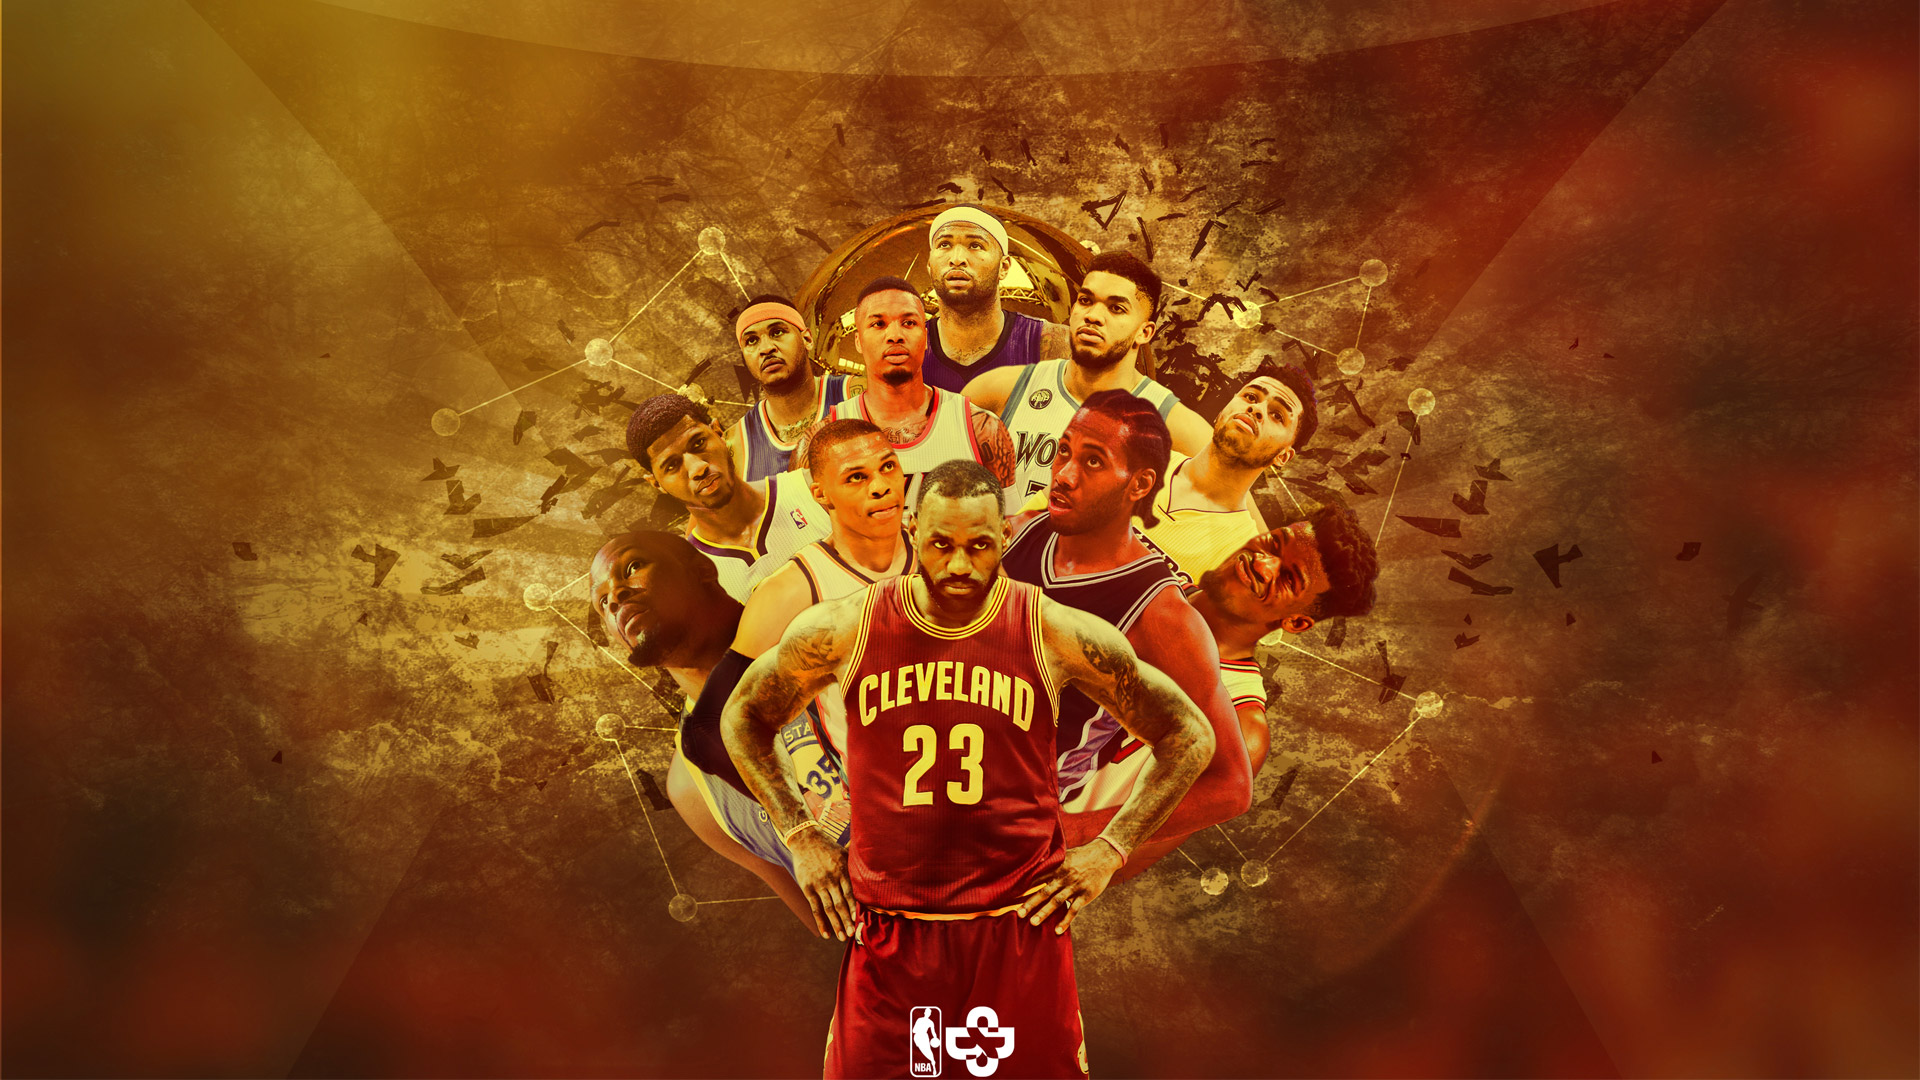 NBA Season 2016 2017 is Coming Wallpaper Basketball Wallpapers at BasketWallpaperscom